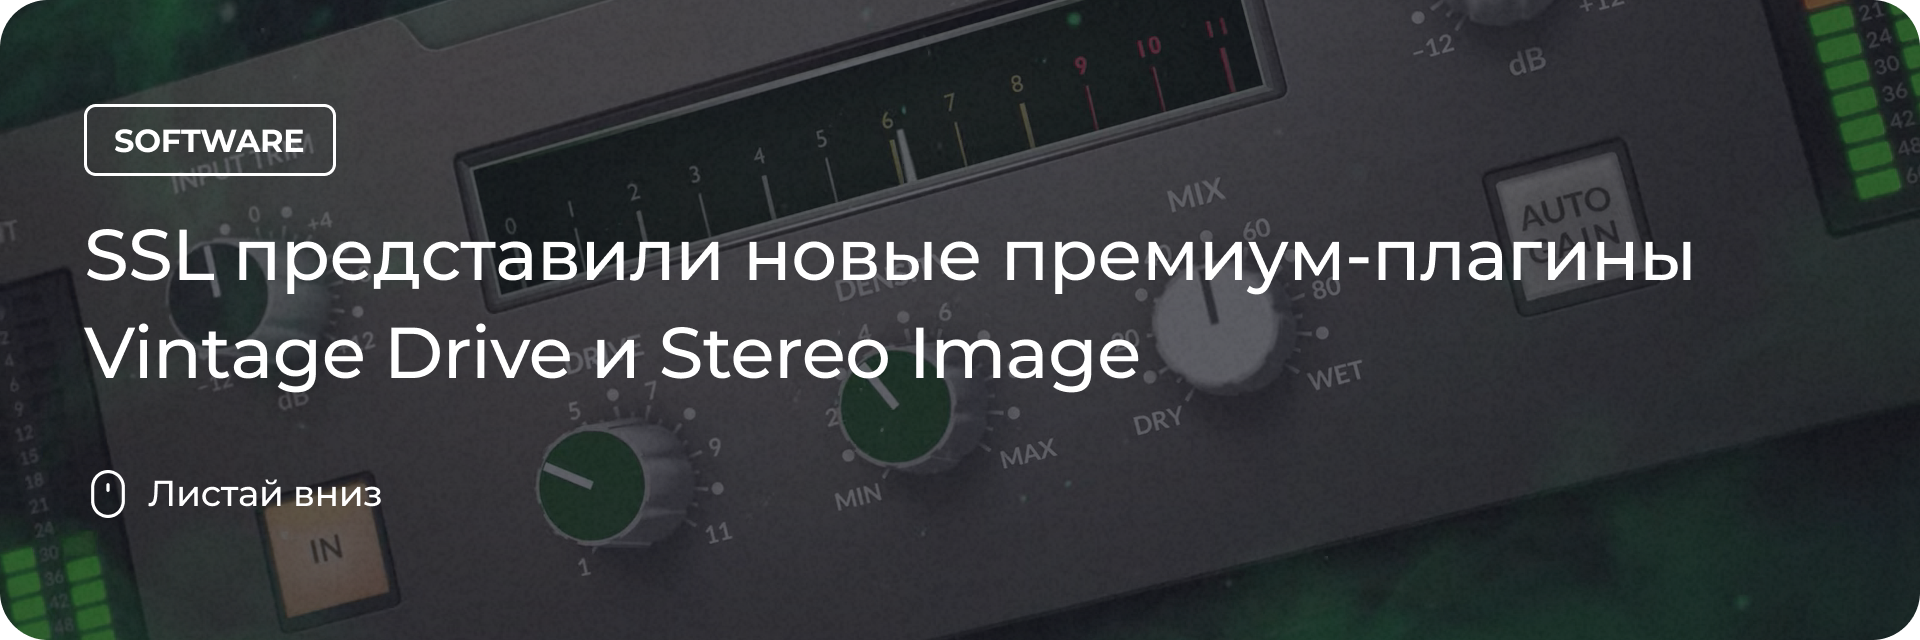 Новые премиум-плагины Vintage Drive и Stereo Image